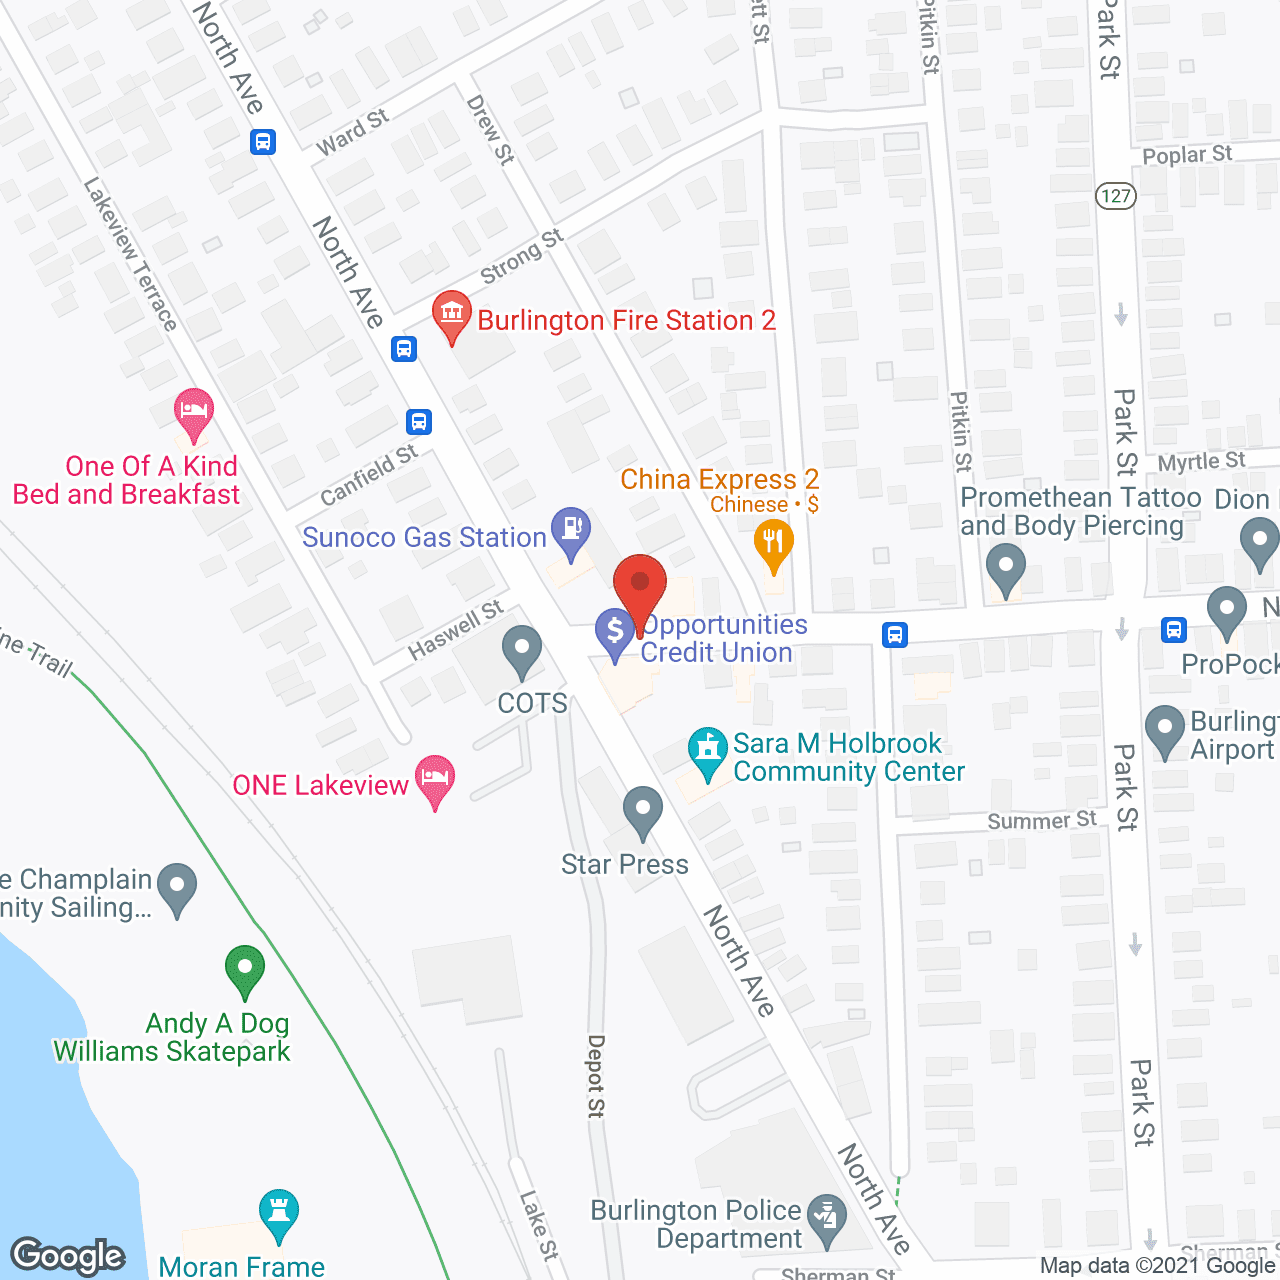 TLC HomeCare Services - South Burlington in google map